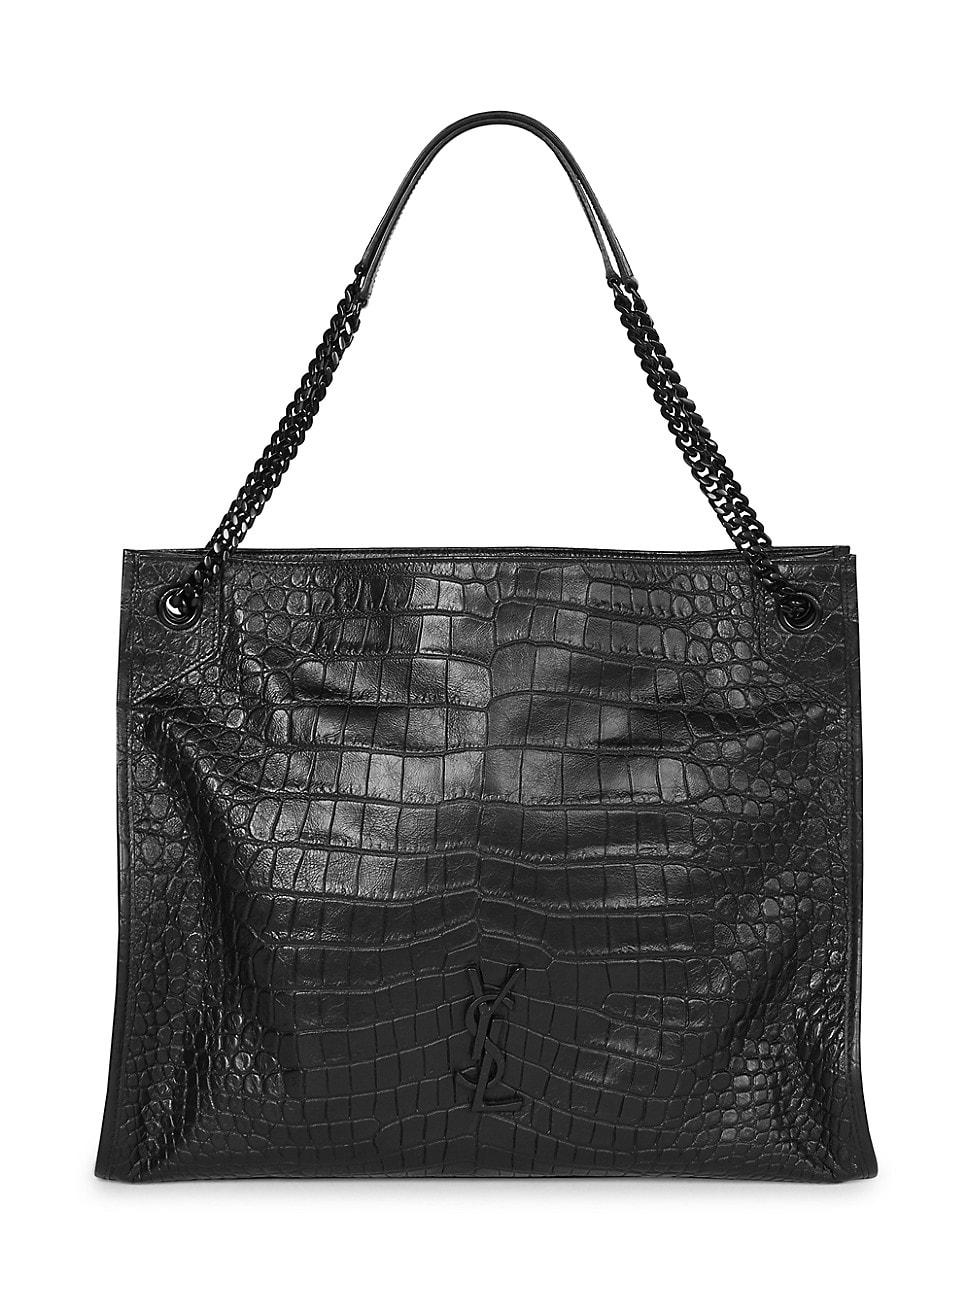 Saint Laurent Niki Monogramme Croc Shoulder Bag in Black | Lyst